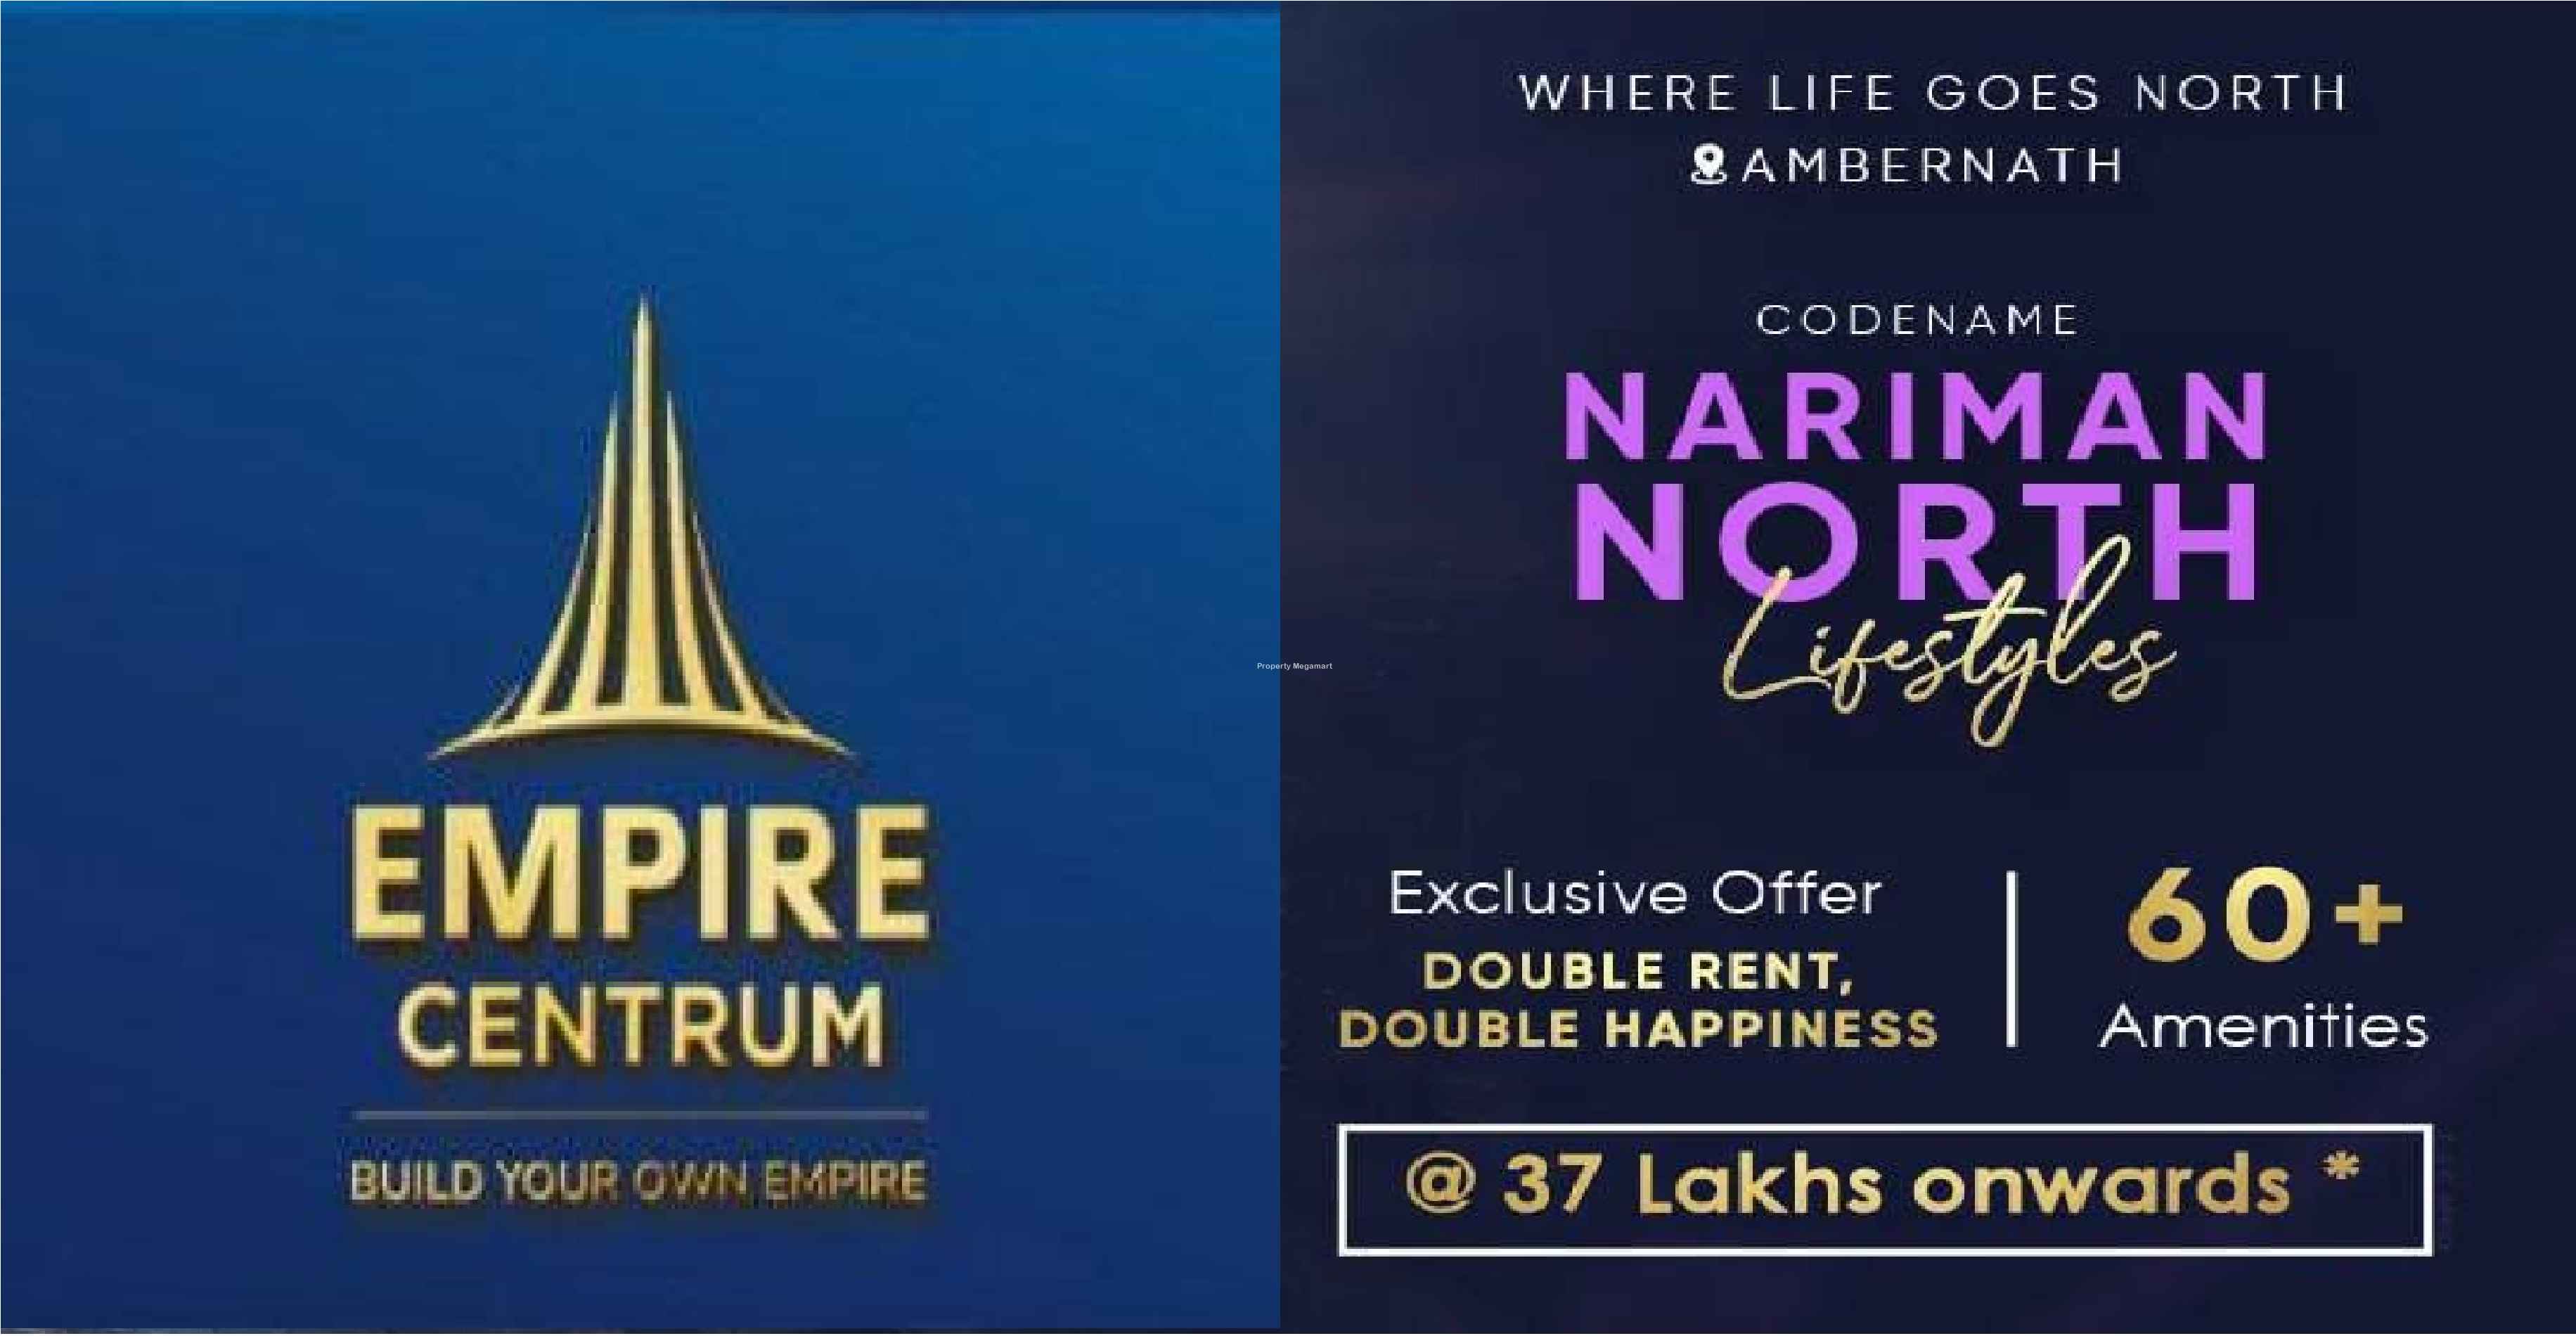 Nariman North Lifestyles Ambernath image